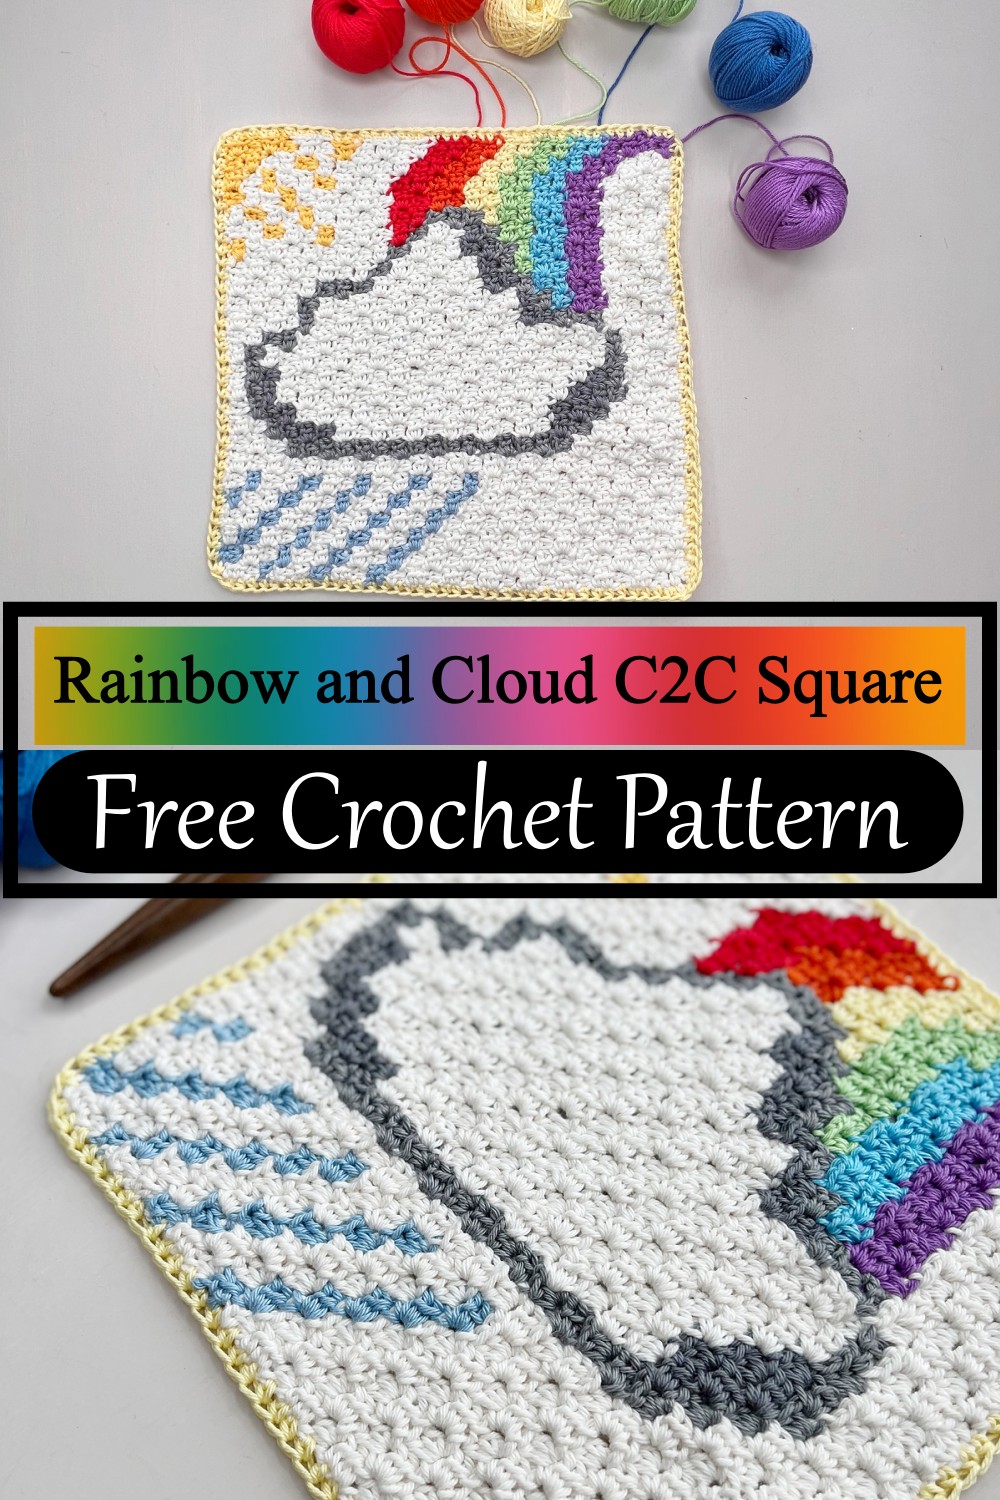 Rainbow and Cloud C2C Square